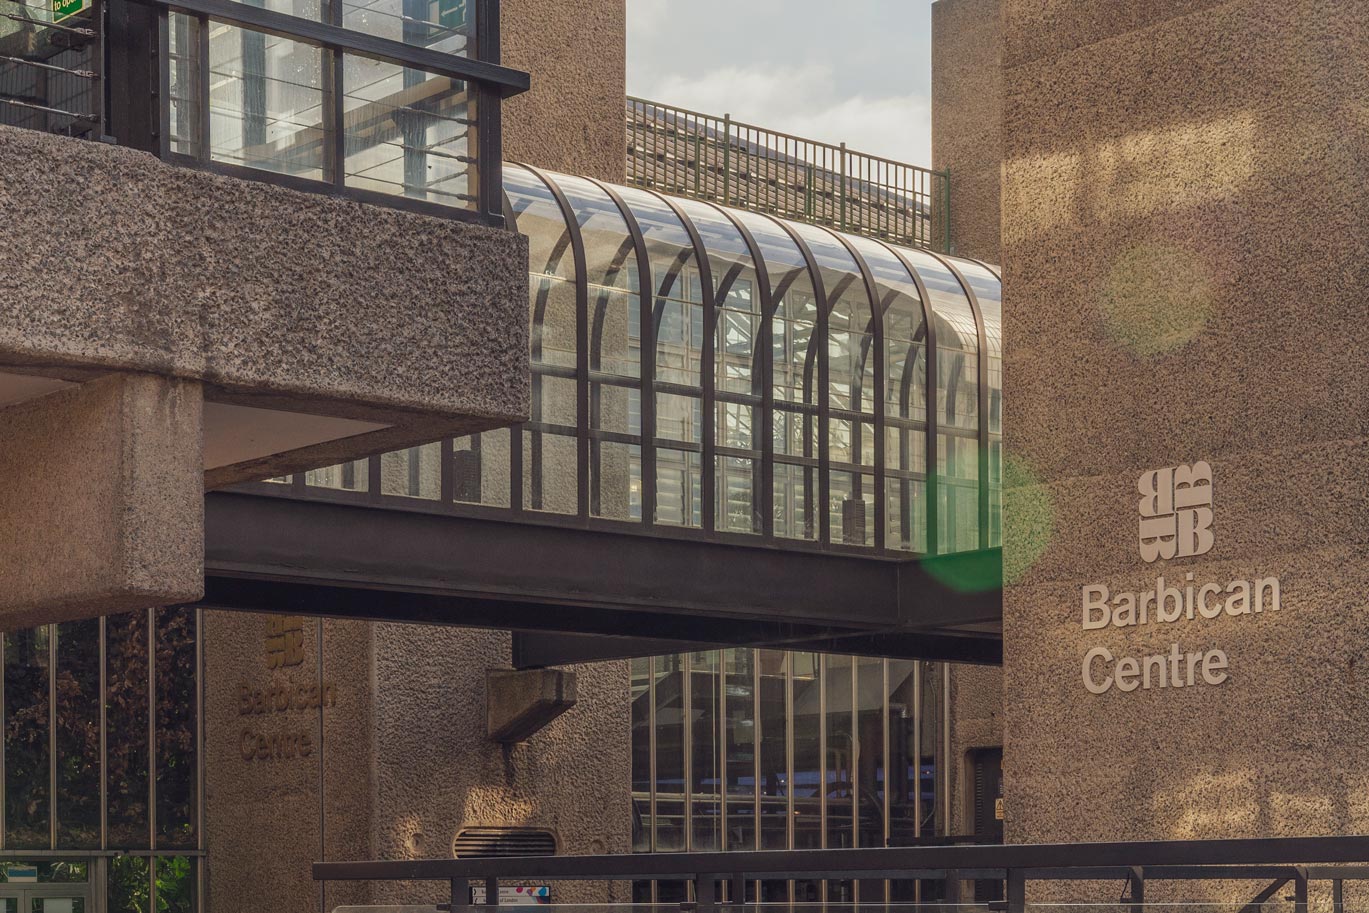 Barbican Center in London